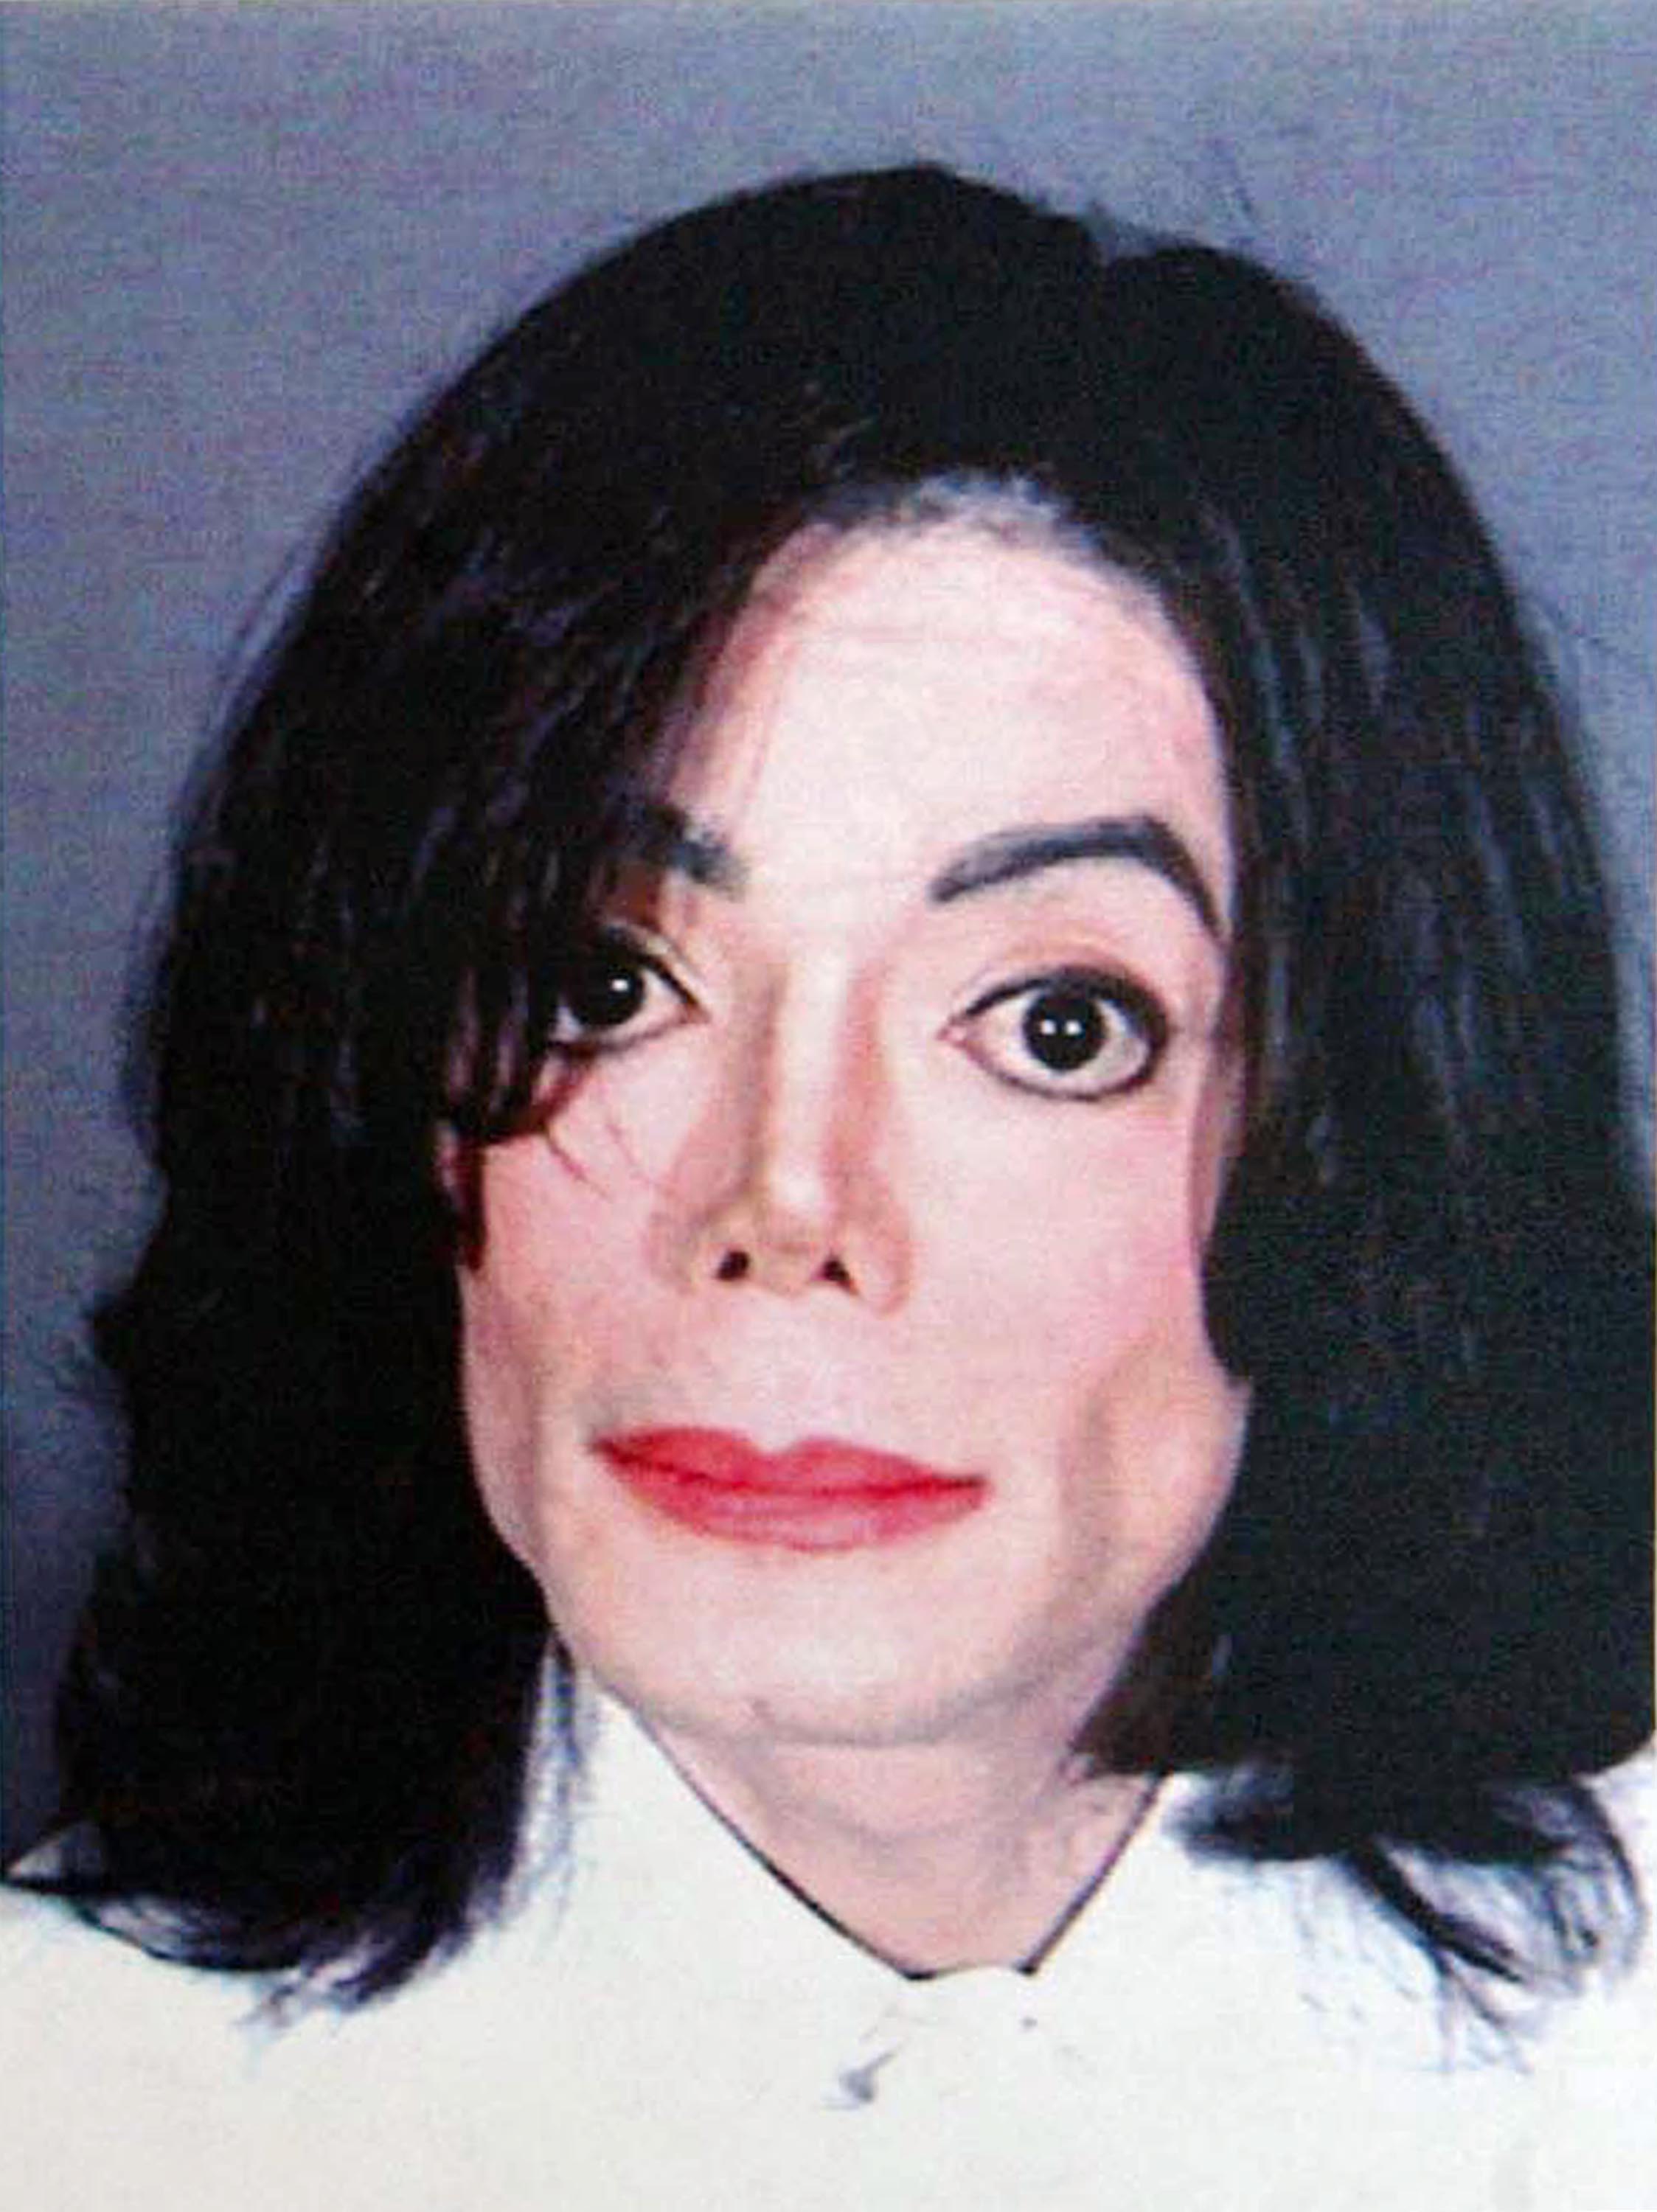 Michael Jackson seen on November 20, 2003 in Santa Maria, California | Source: Getty Images